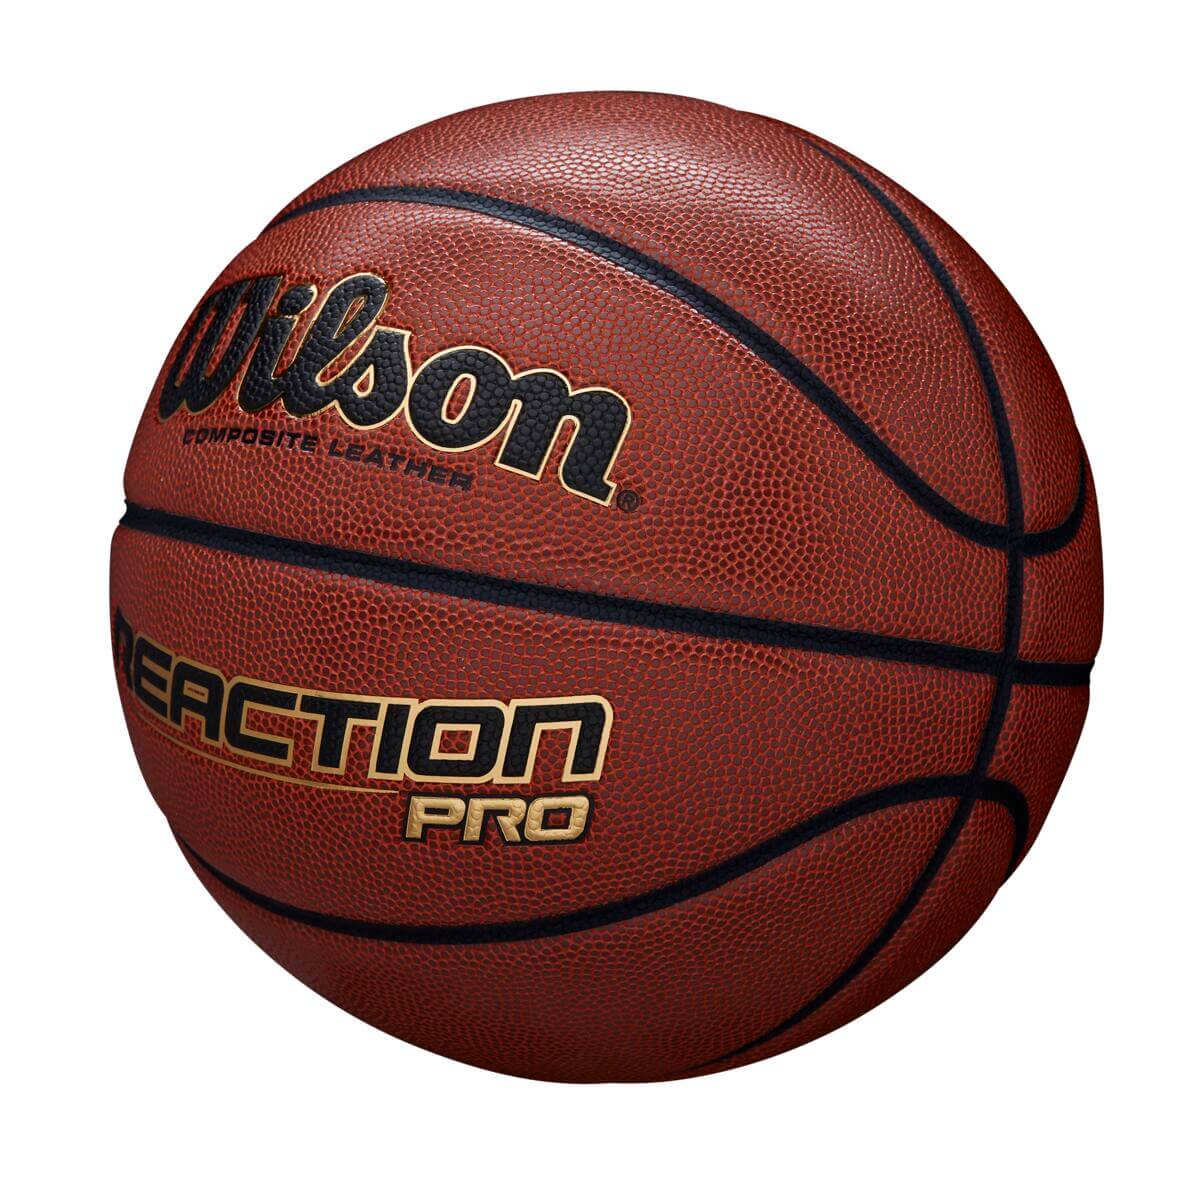 Ballons de basket Reaction Pro